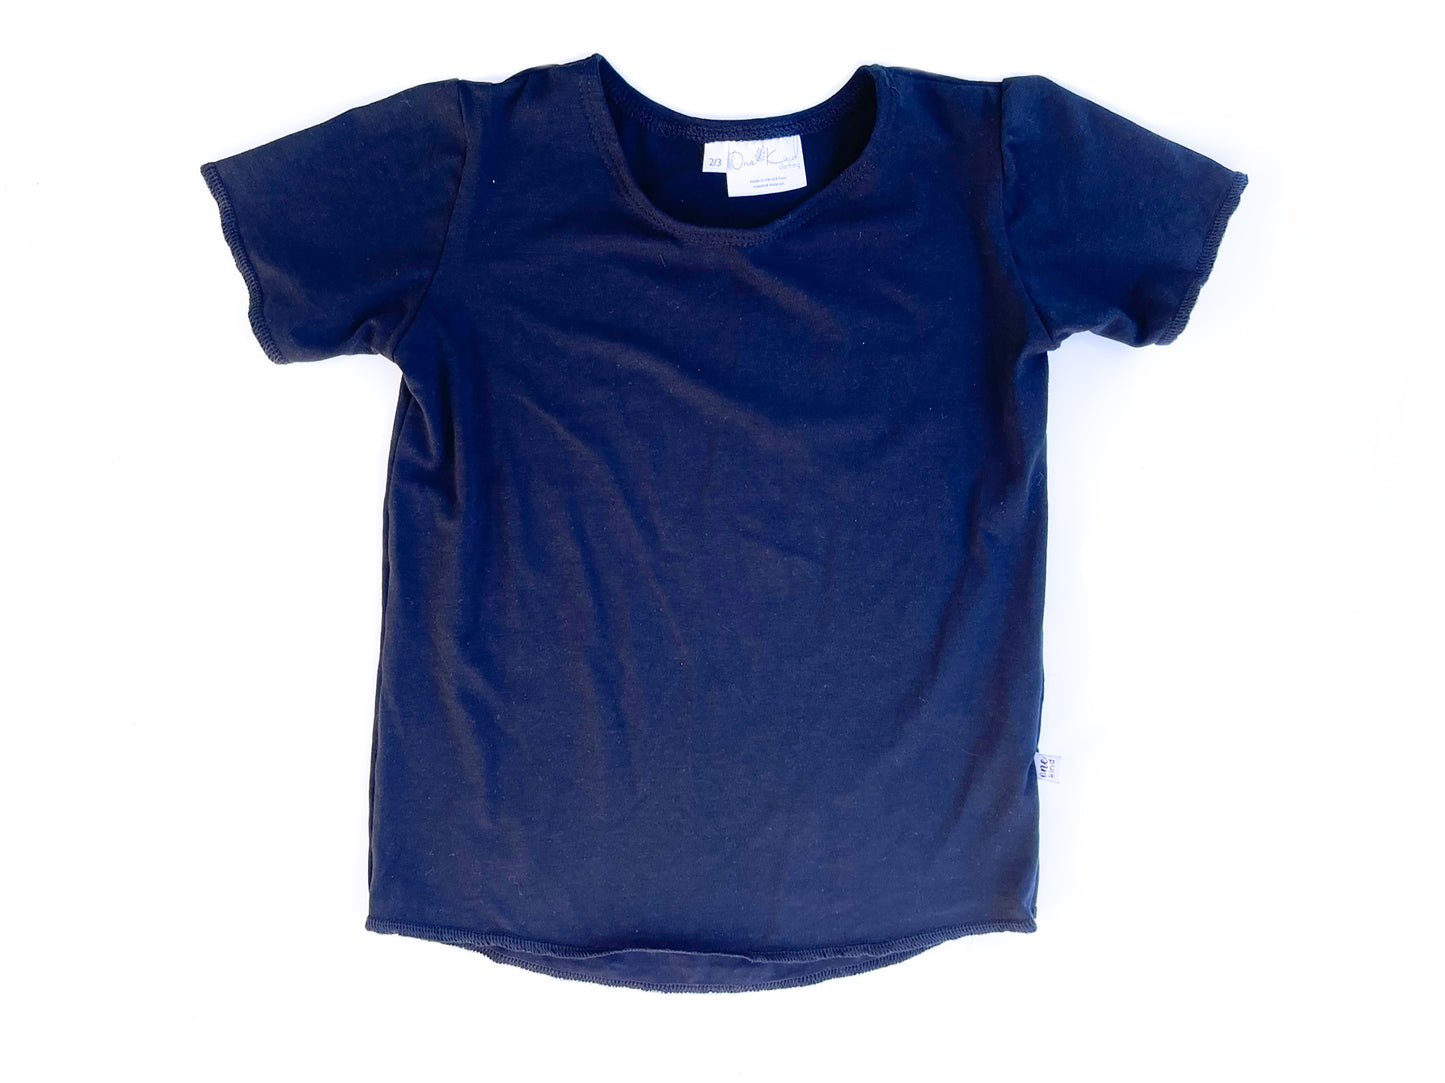 Slouchy Tee | Navy Blue - One Kind Clothing, LLC